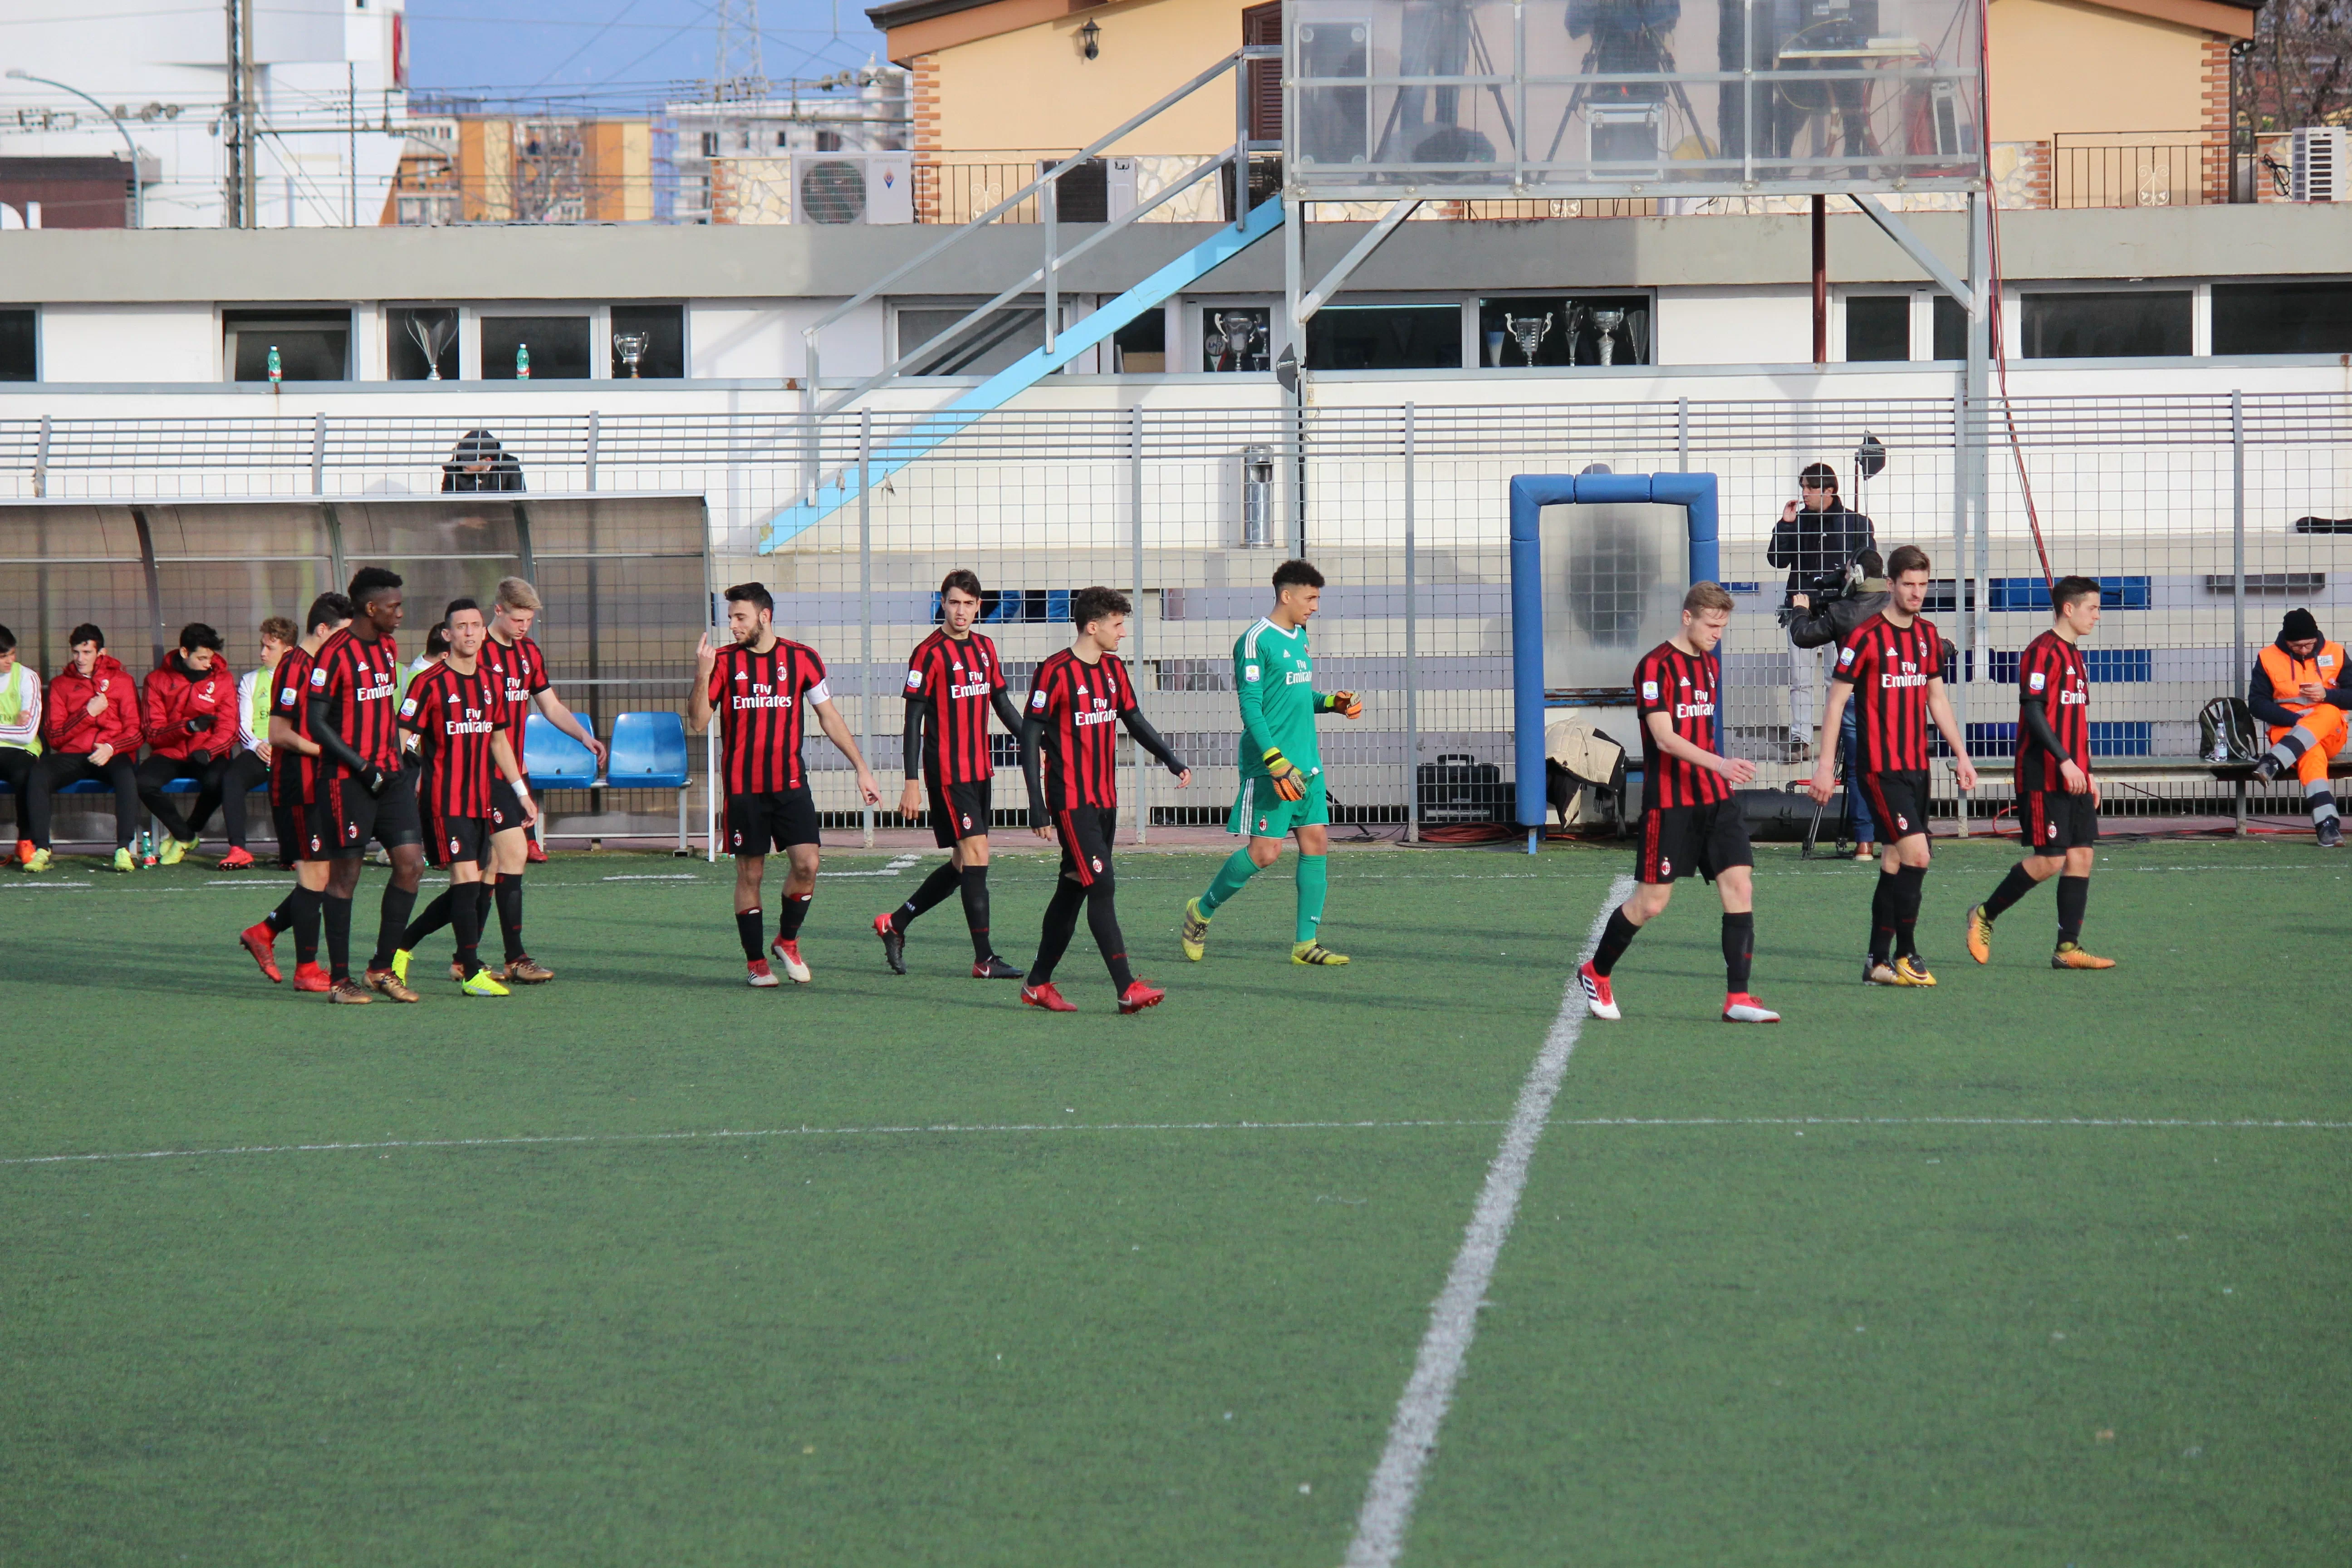 Sampdoria-Milan primavera, Pavan: “Milan ostacolo molto duro”